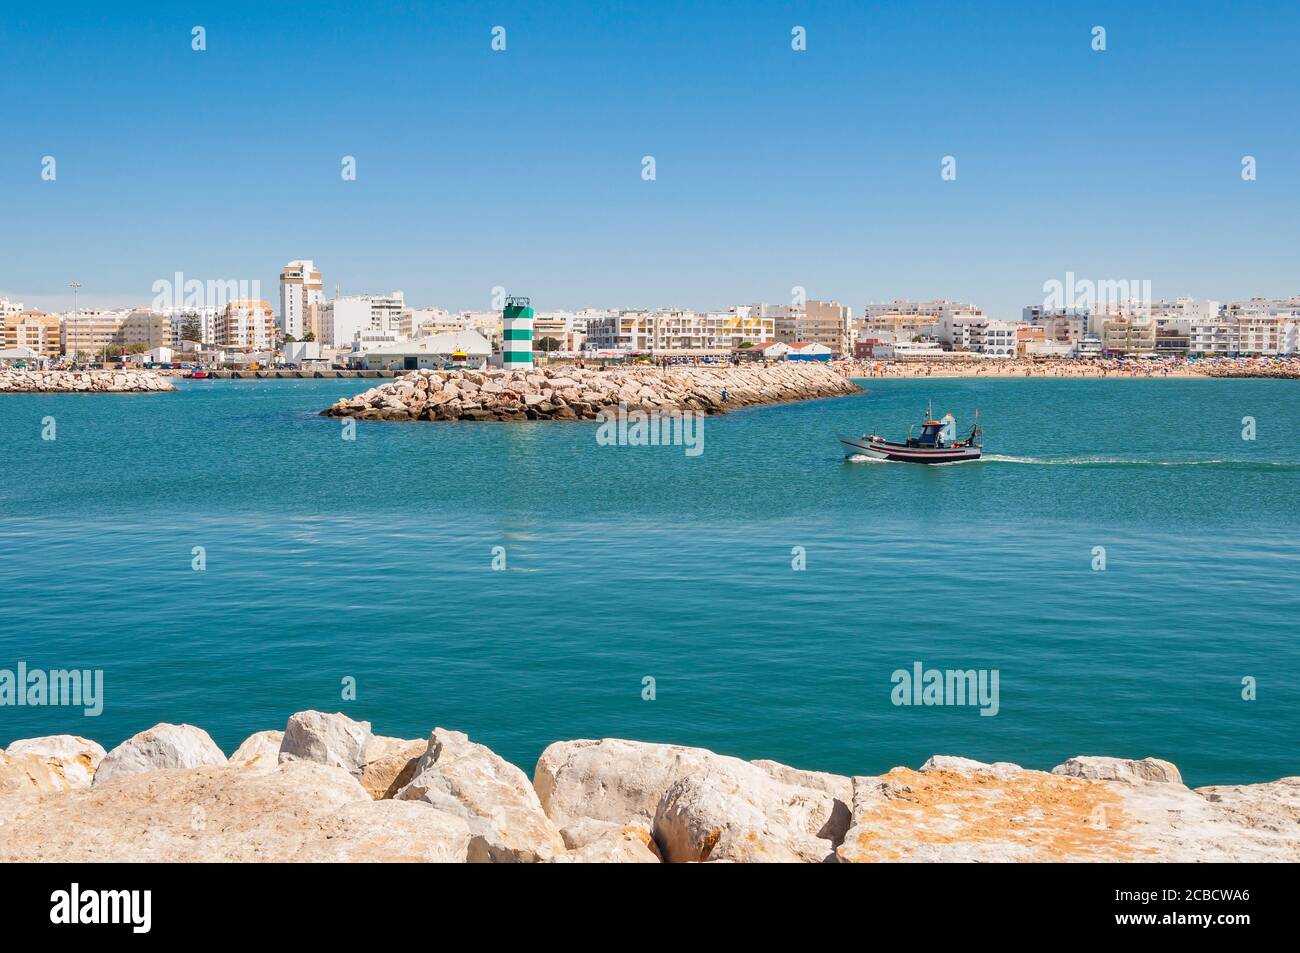 Fishboat enters the port of VIlamoura town, Algarve, Portugal Stock Photo